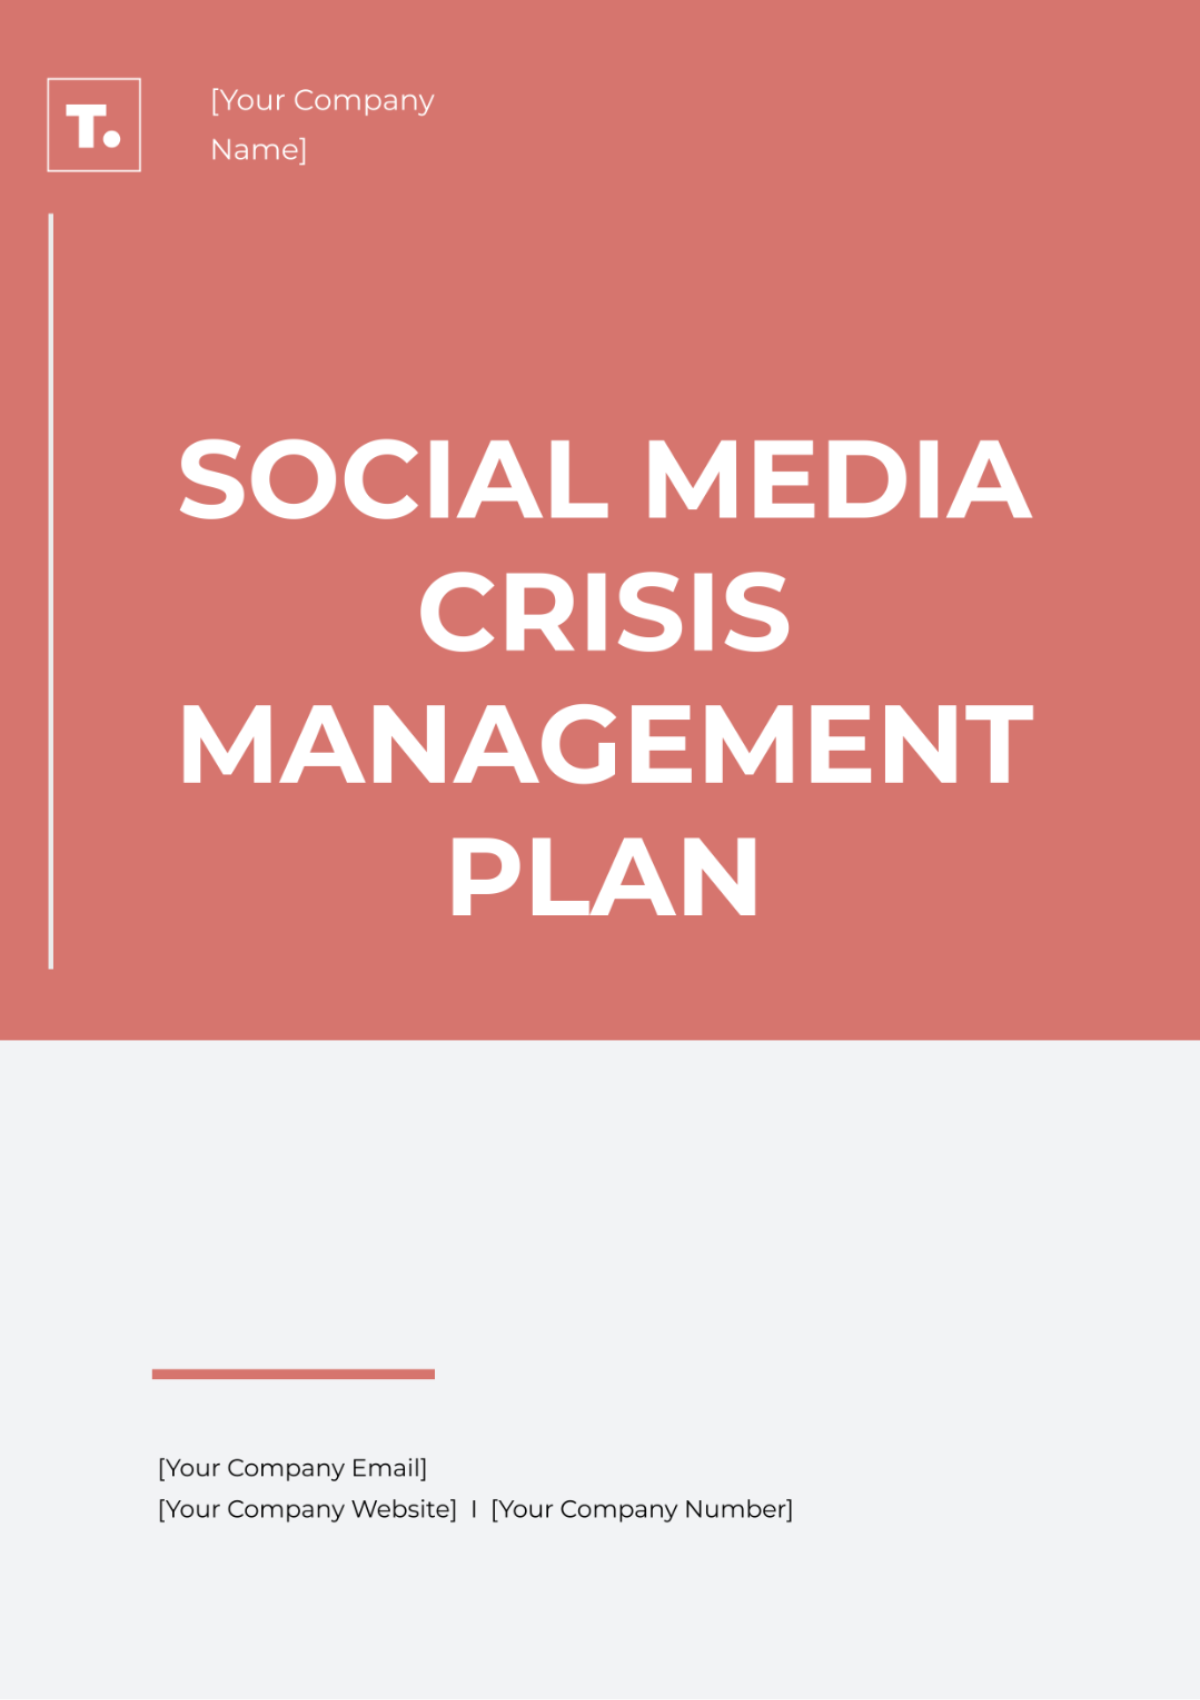 Free Social Media Crisis Management Plan Template